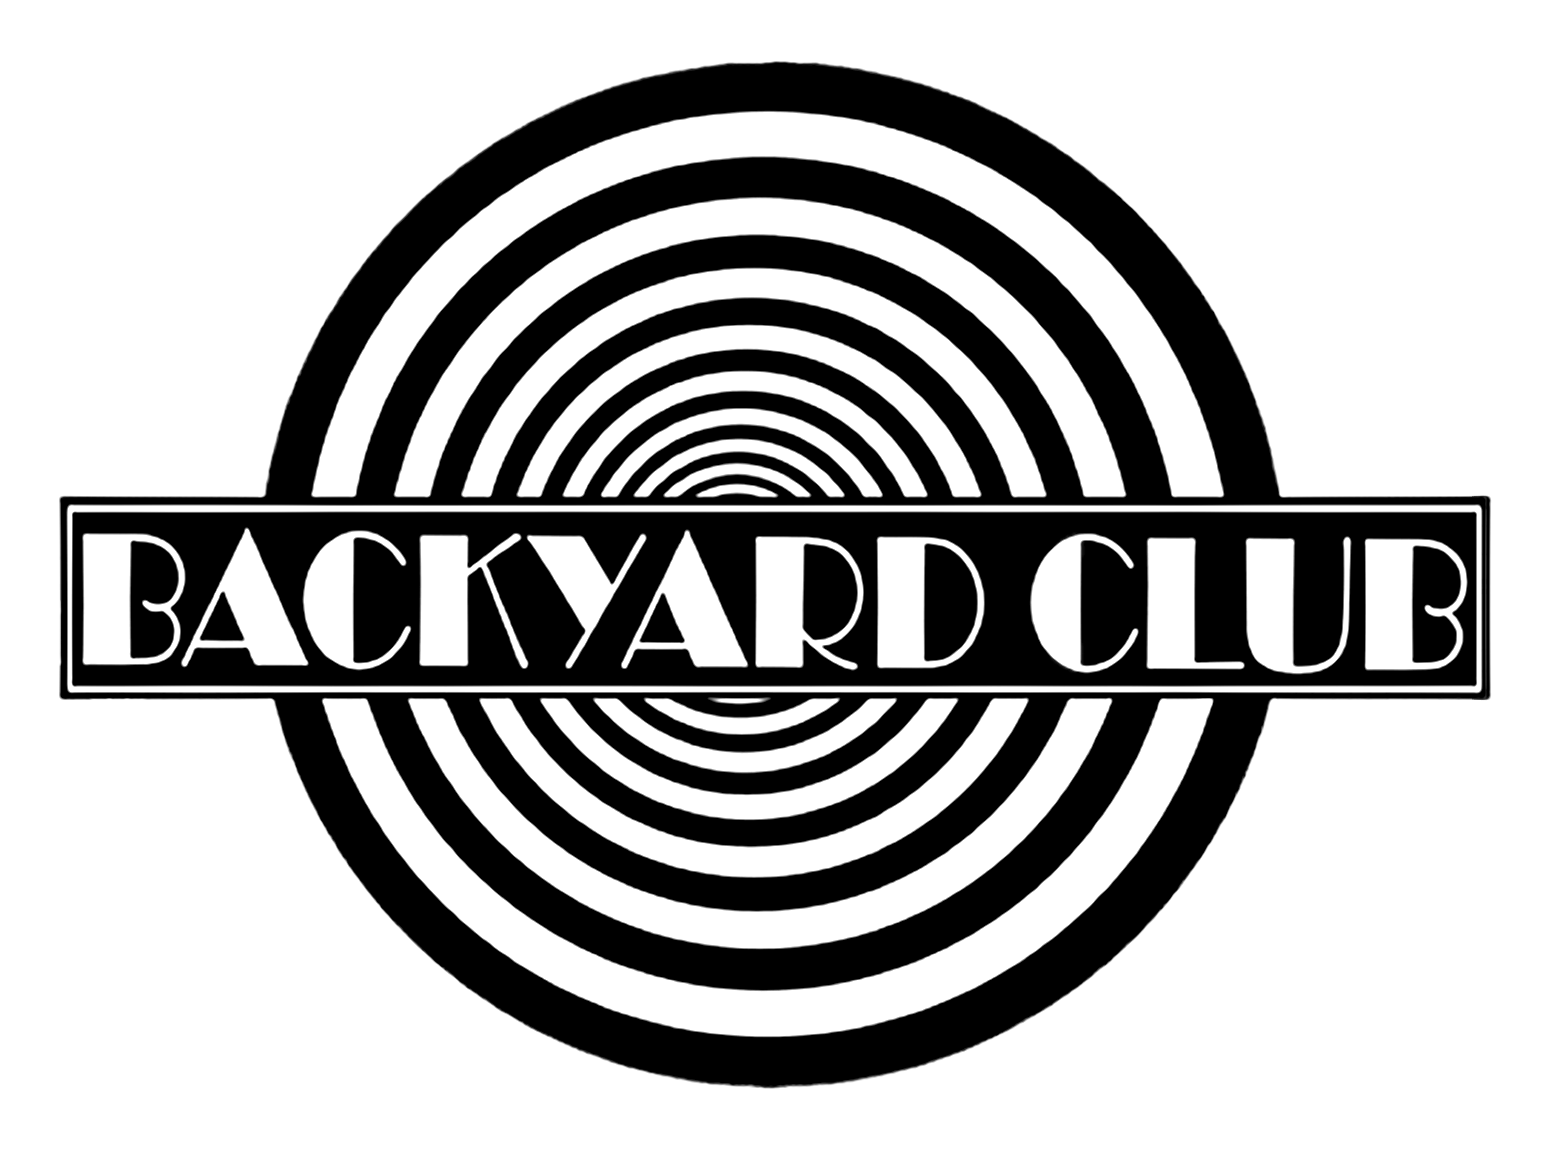 BackYard Club